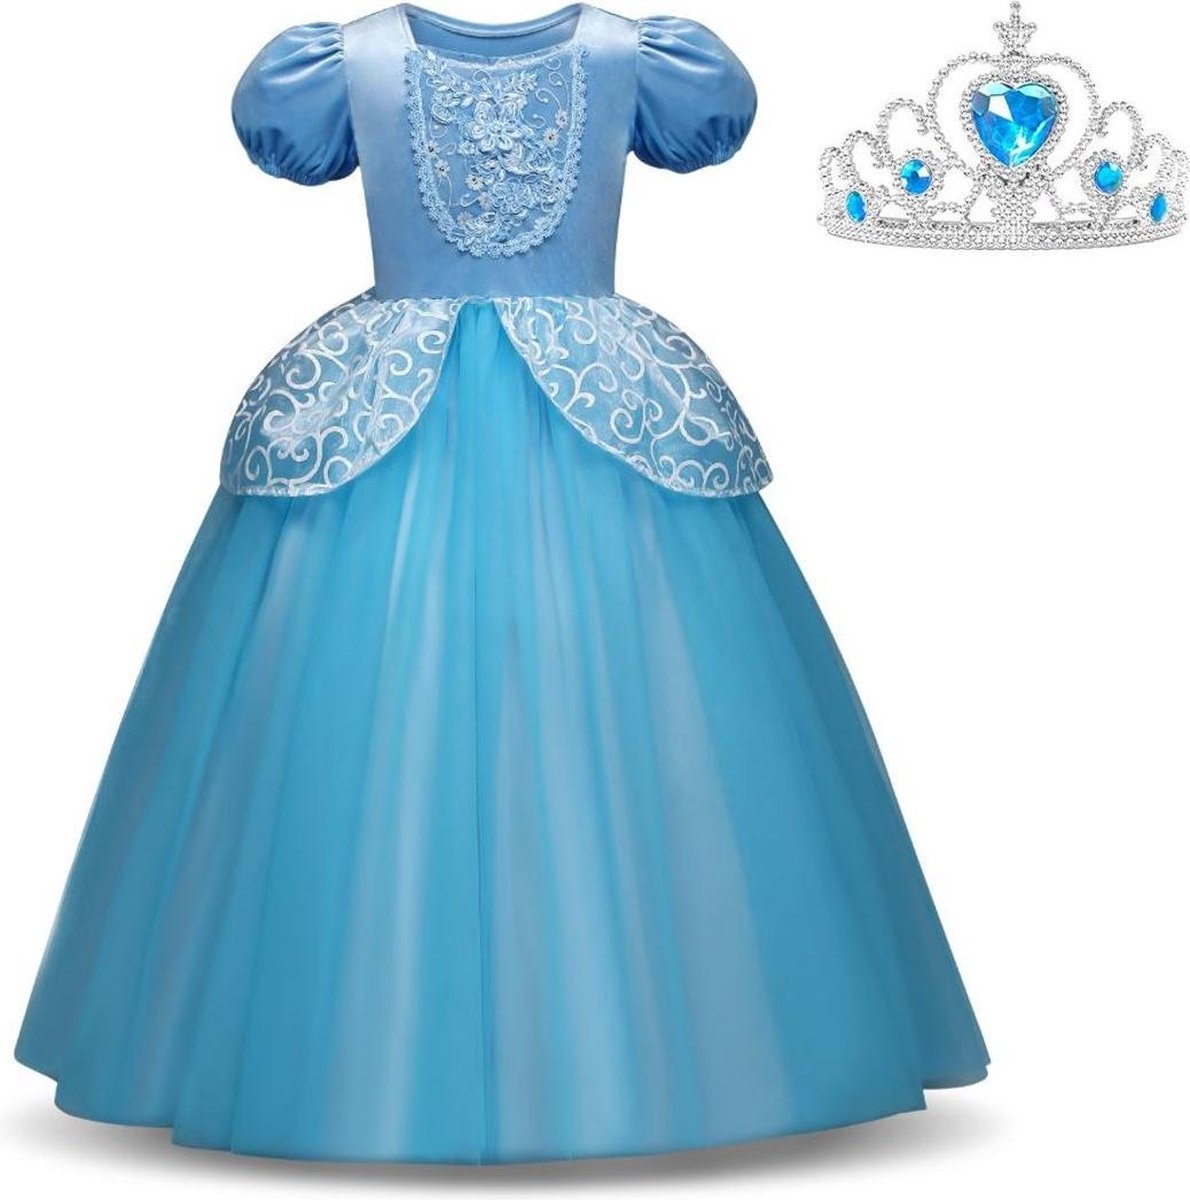 Assepoester jurk Deluxe Prinsessen jurk verkleedjurk 128-134 (130) blauw + blauwe kroon